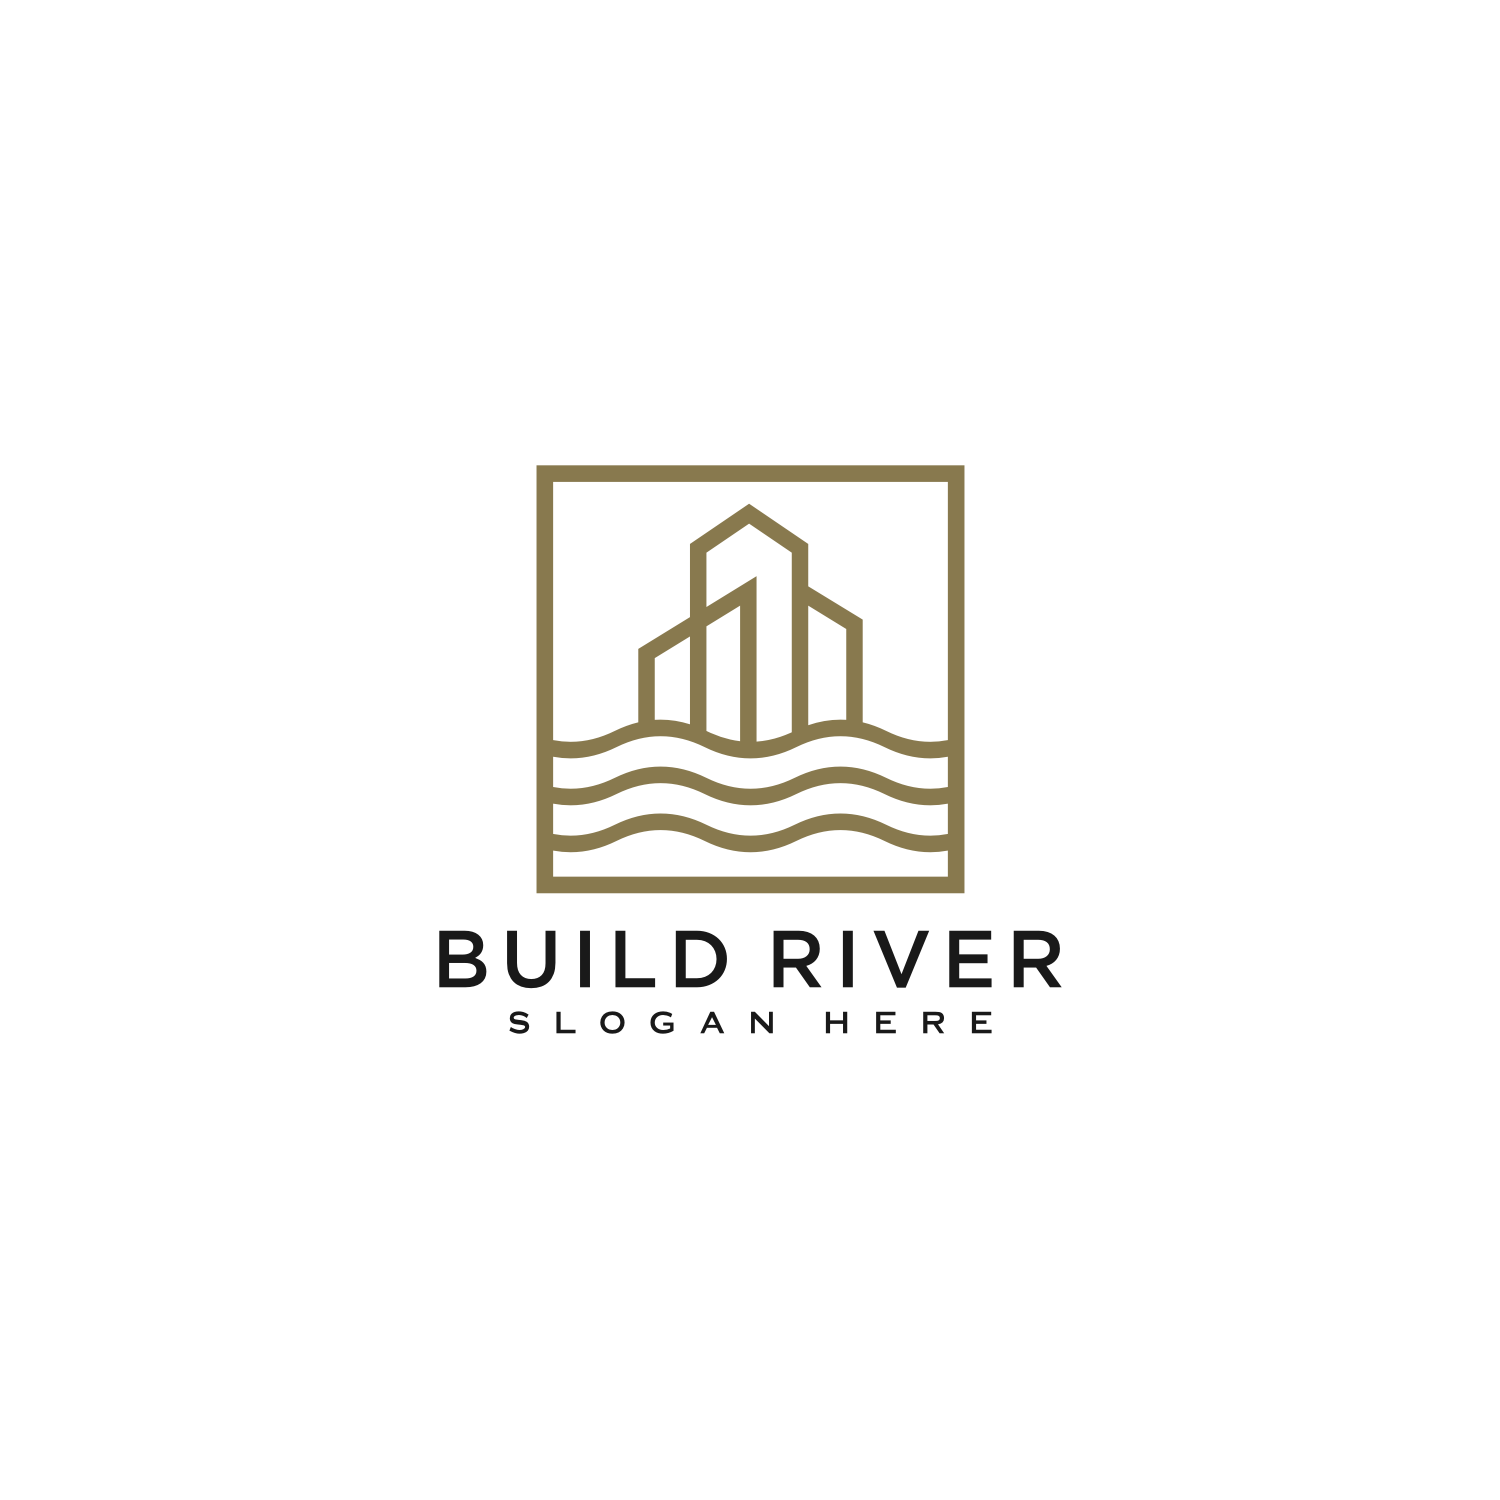 Building River Logo Vector Design Template Cover Image.